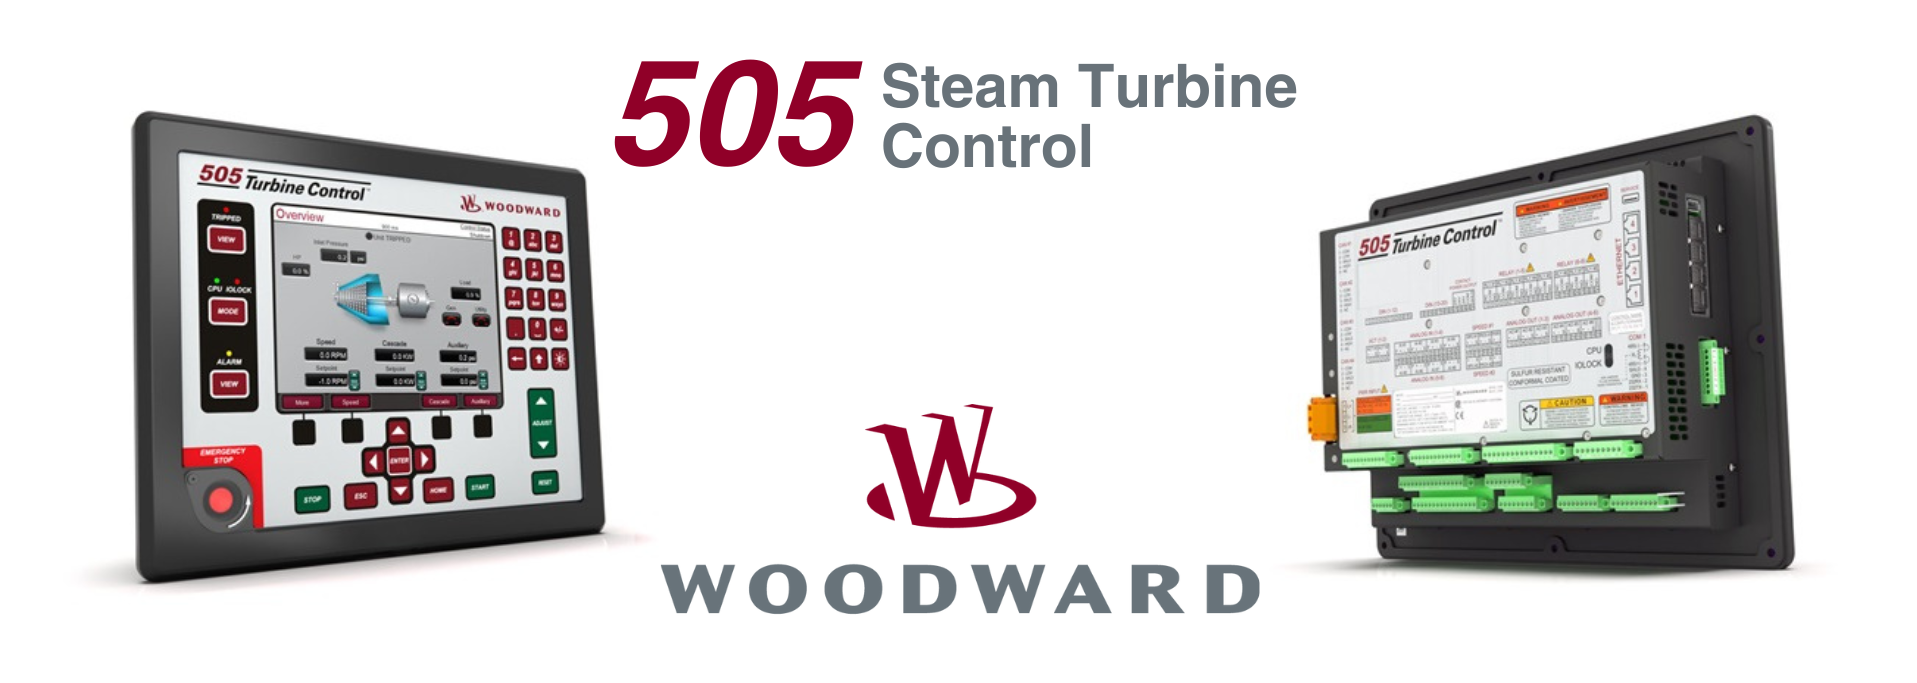 MSHS Woodward 505 Steam Turbine Control